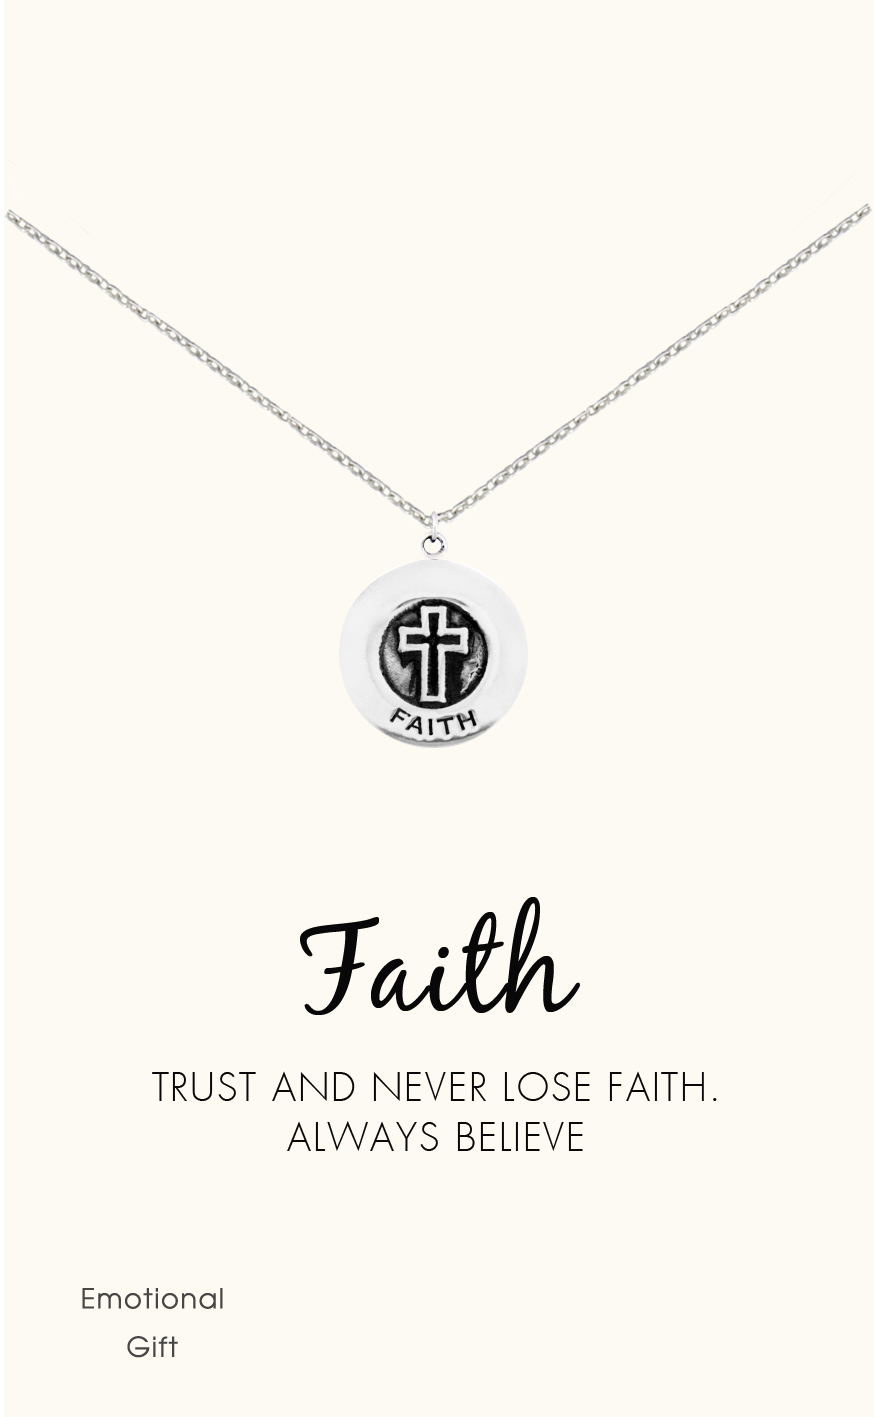 Faith cross silver pendant